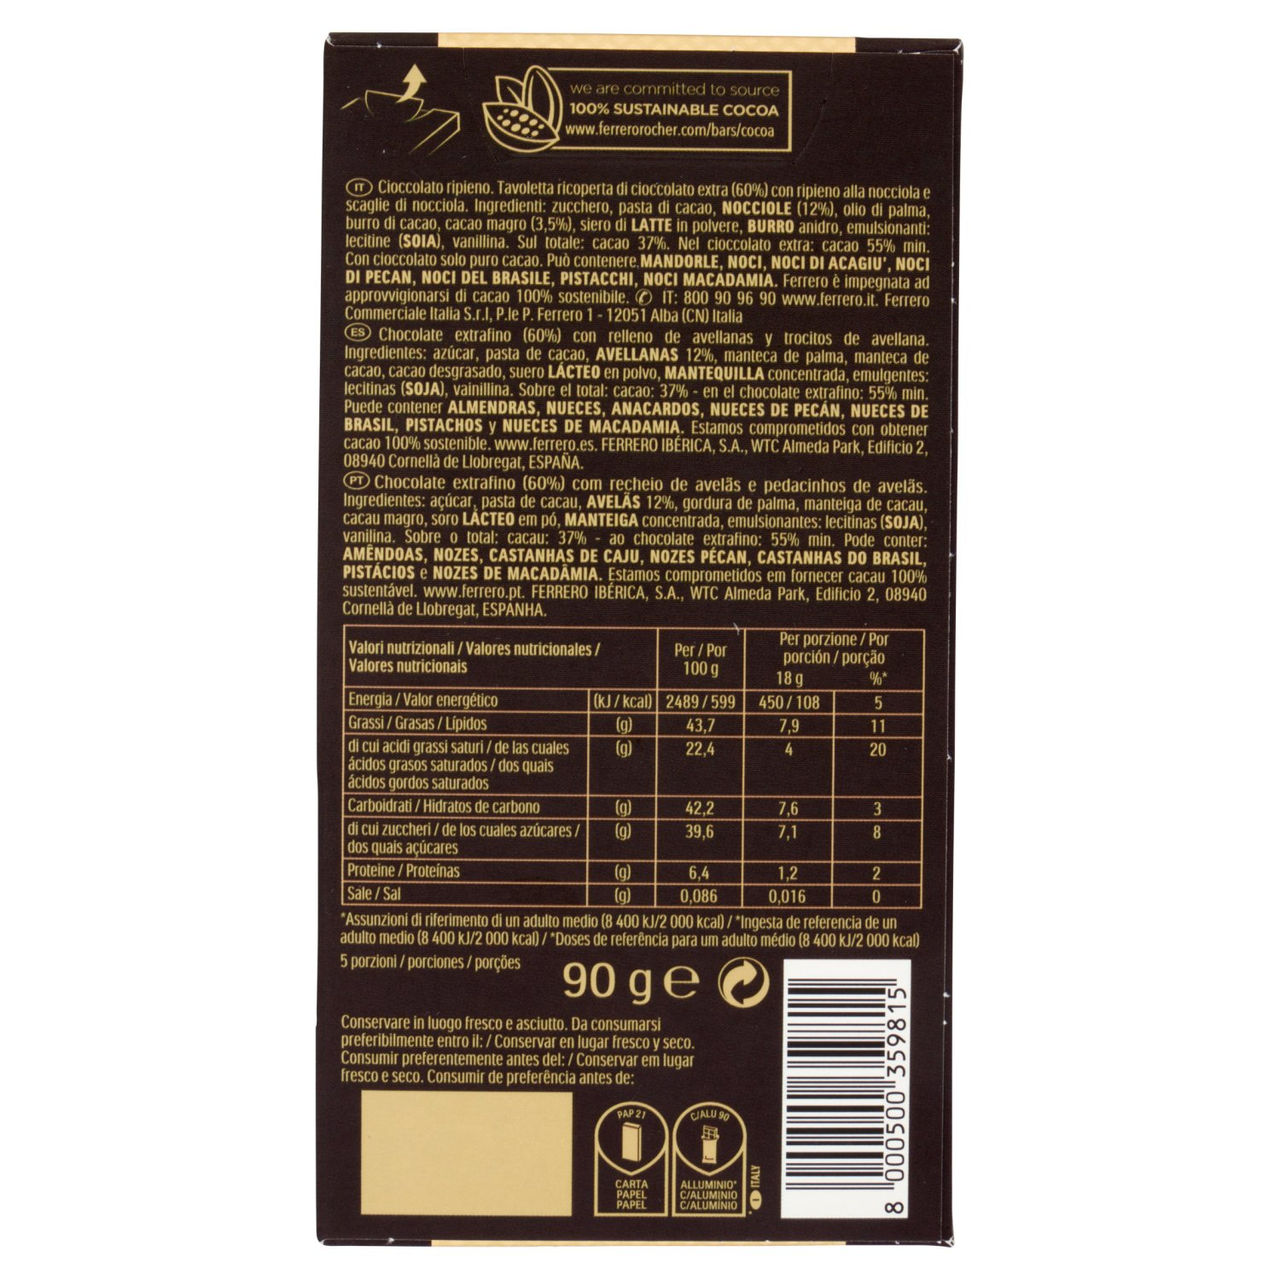 Ferrero Rocher Dark 55%** Nocciola 90 g